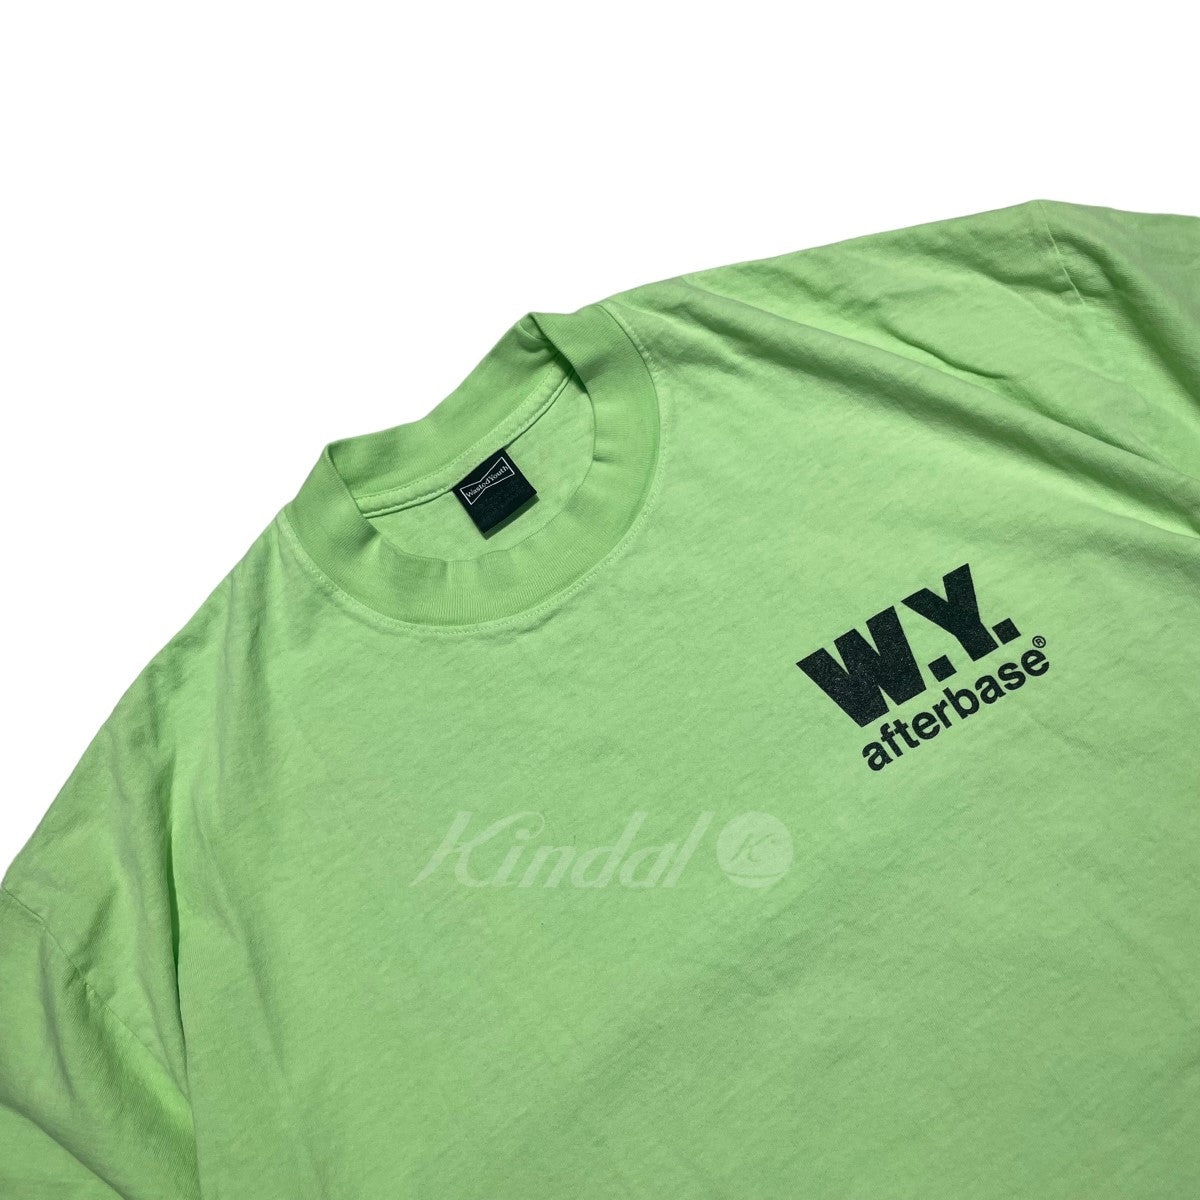 Wasted Youth(ウェイステッドユース) 半袖Tシャツ 黄緑 サイズ 14 ...